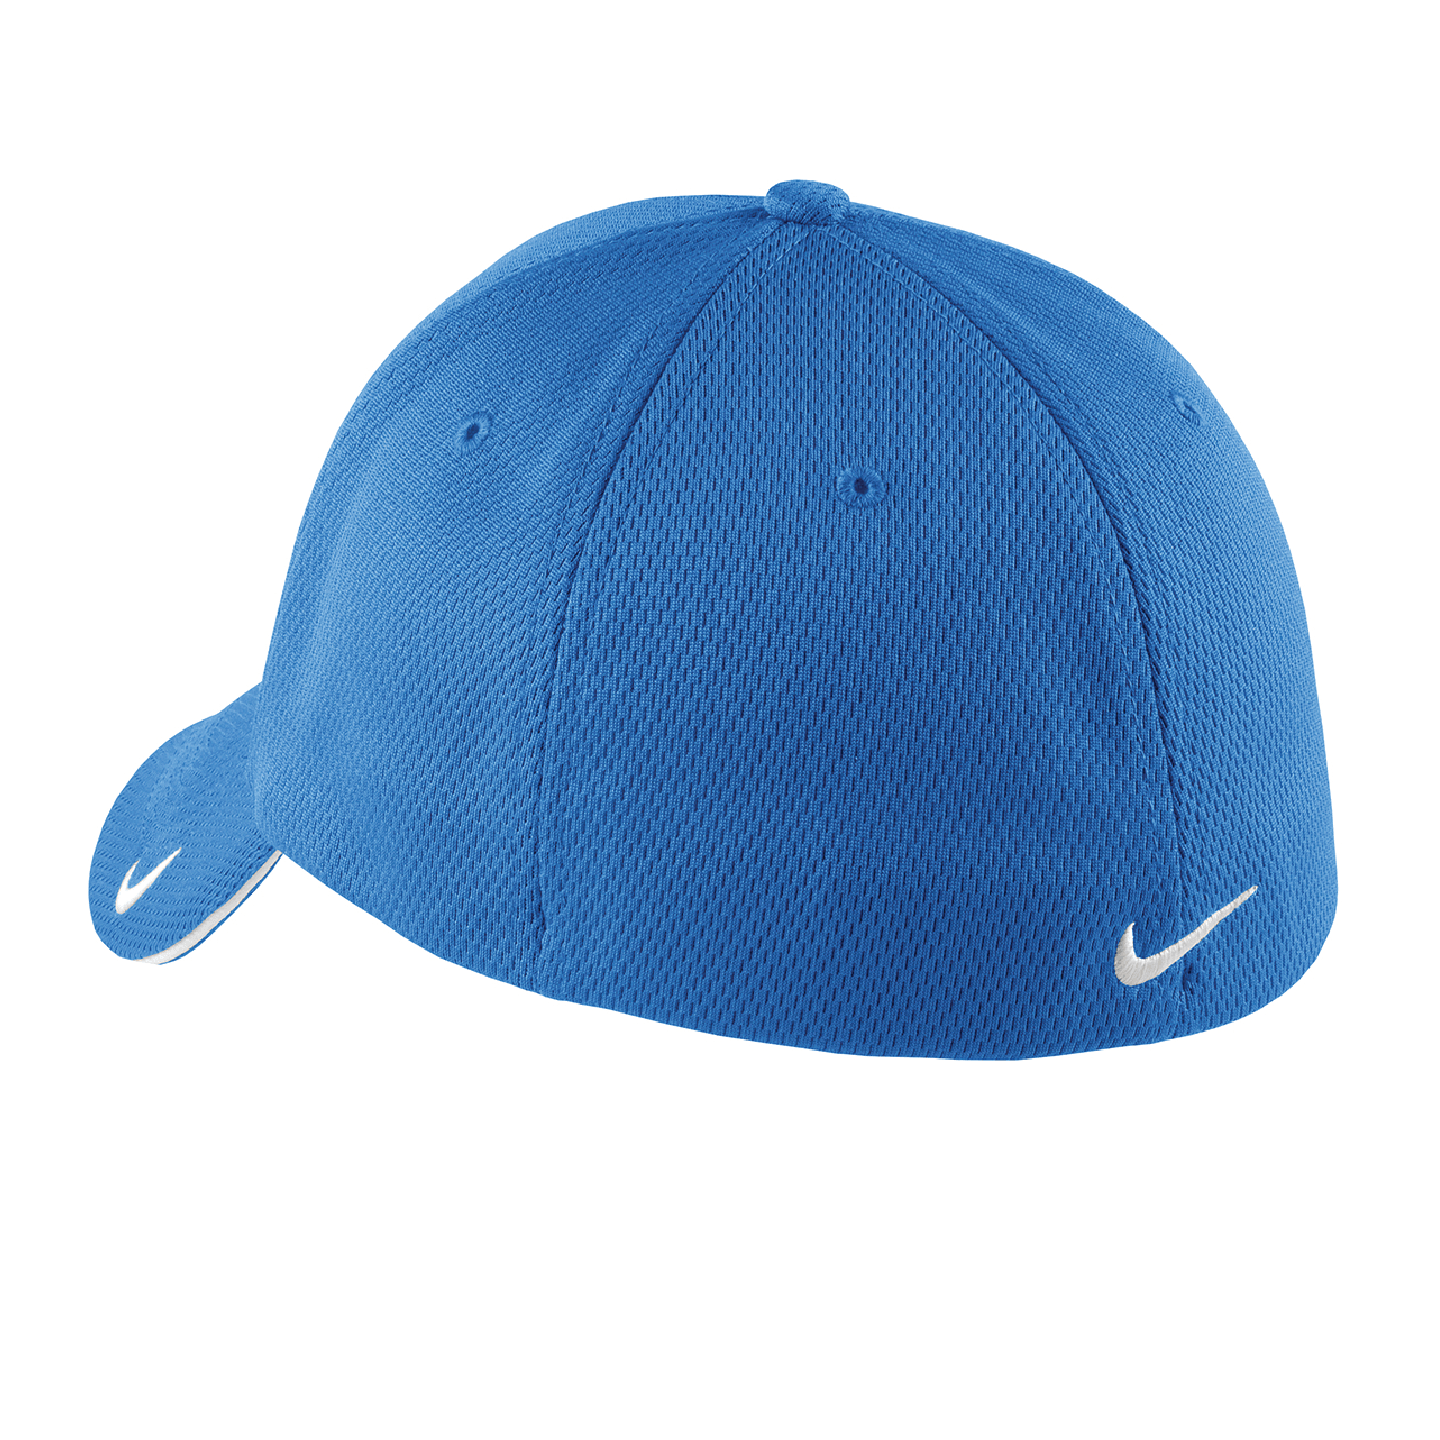 Nike Dri-FIT Mesh Cap